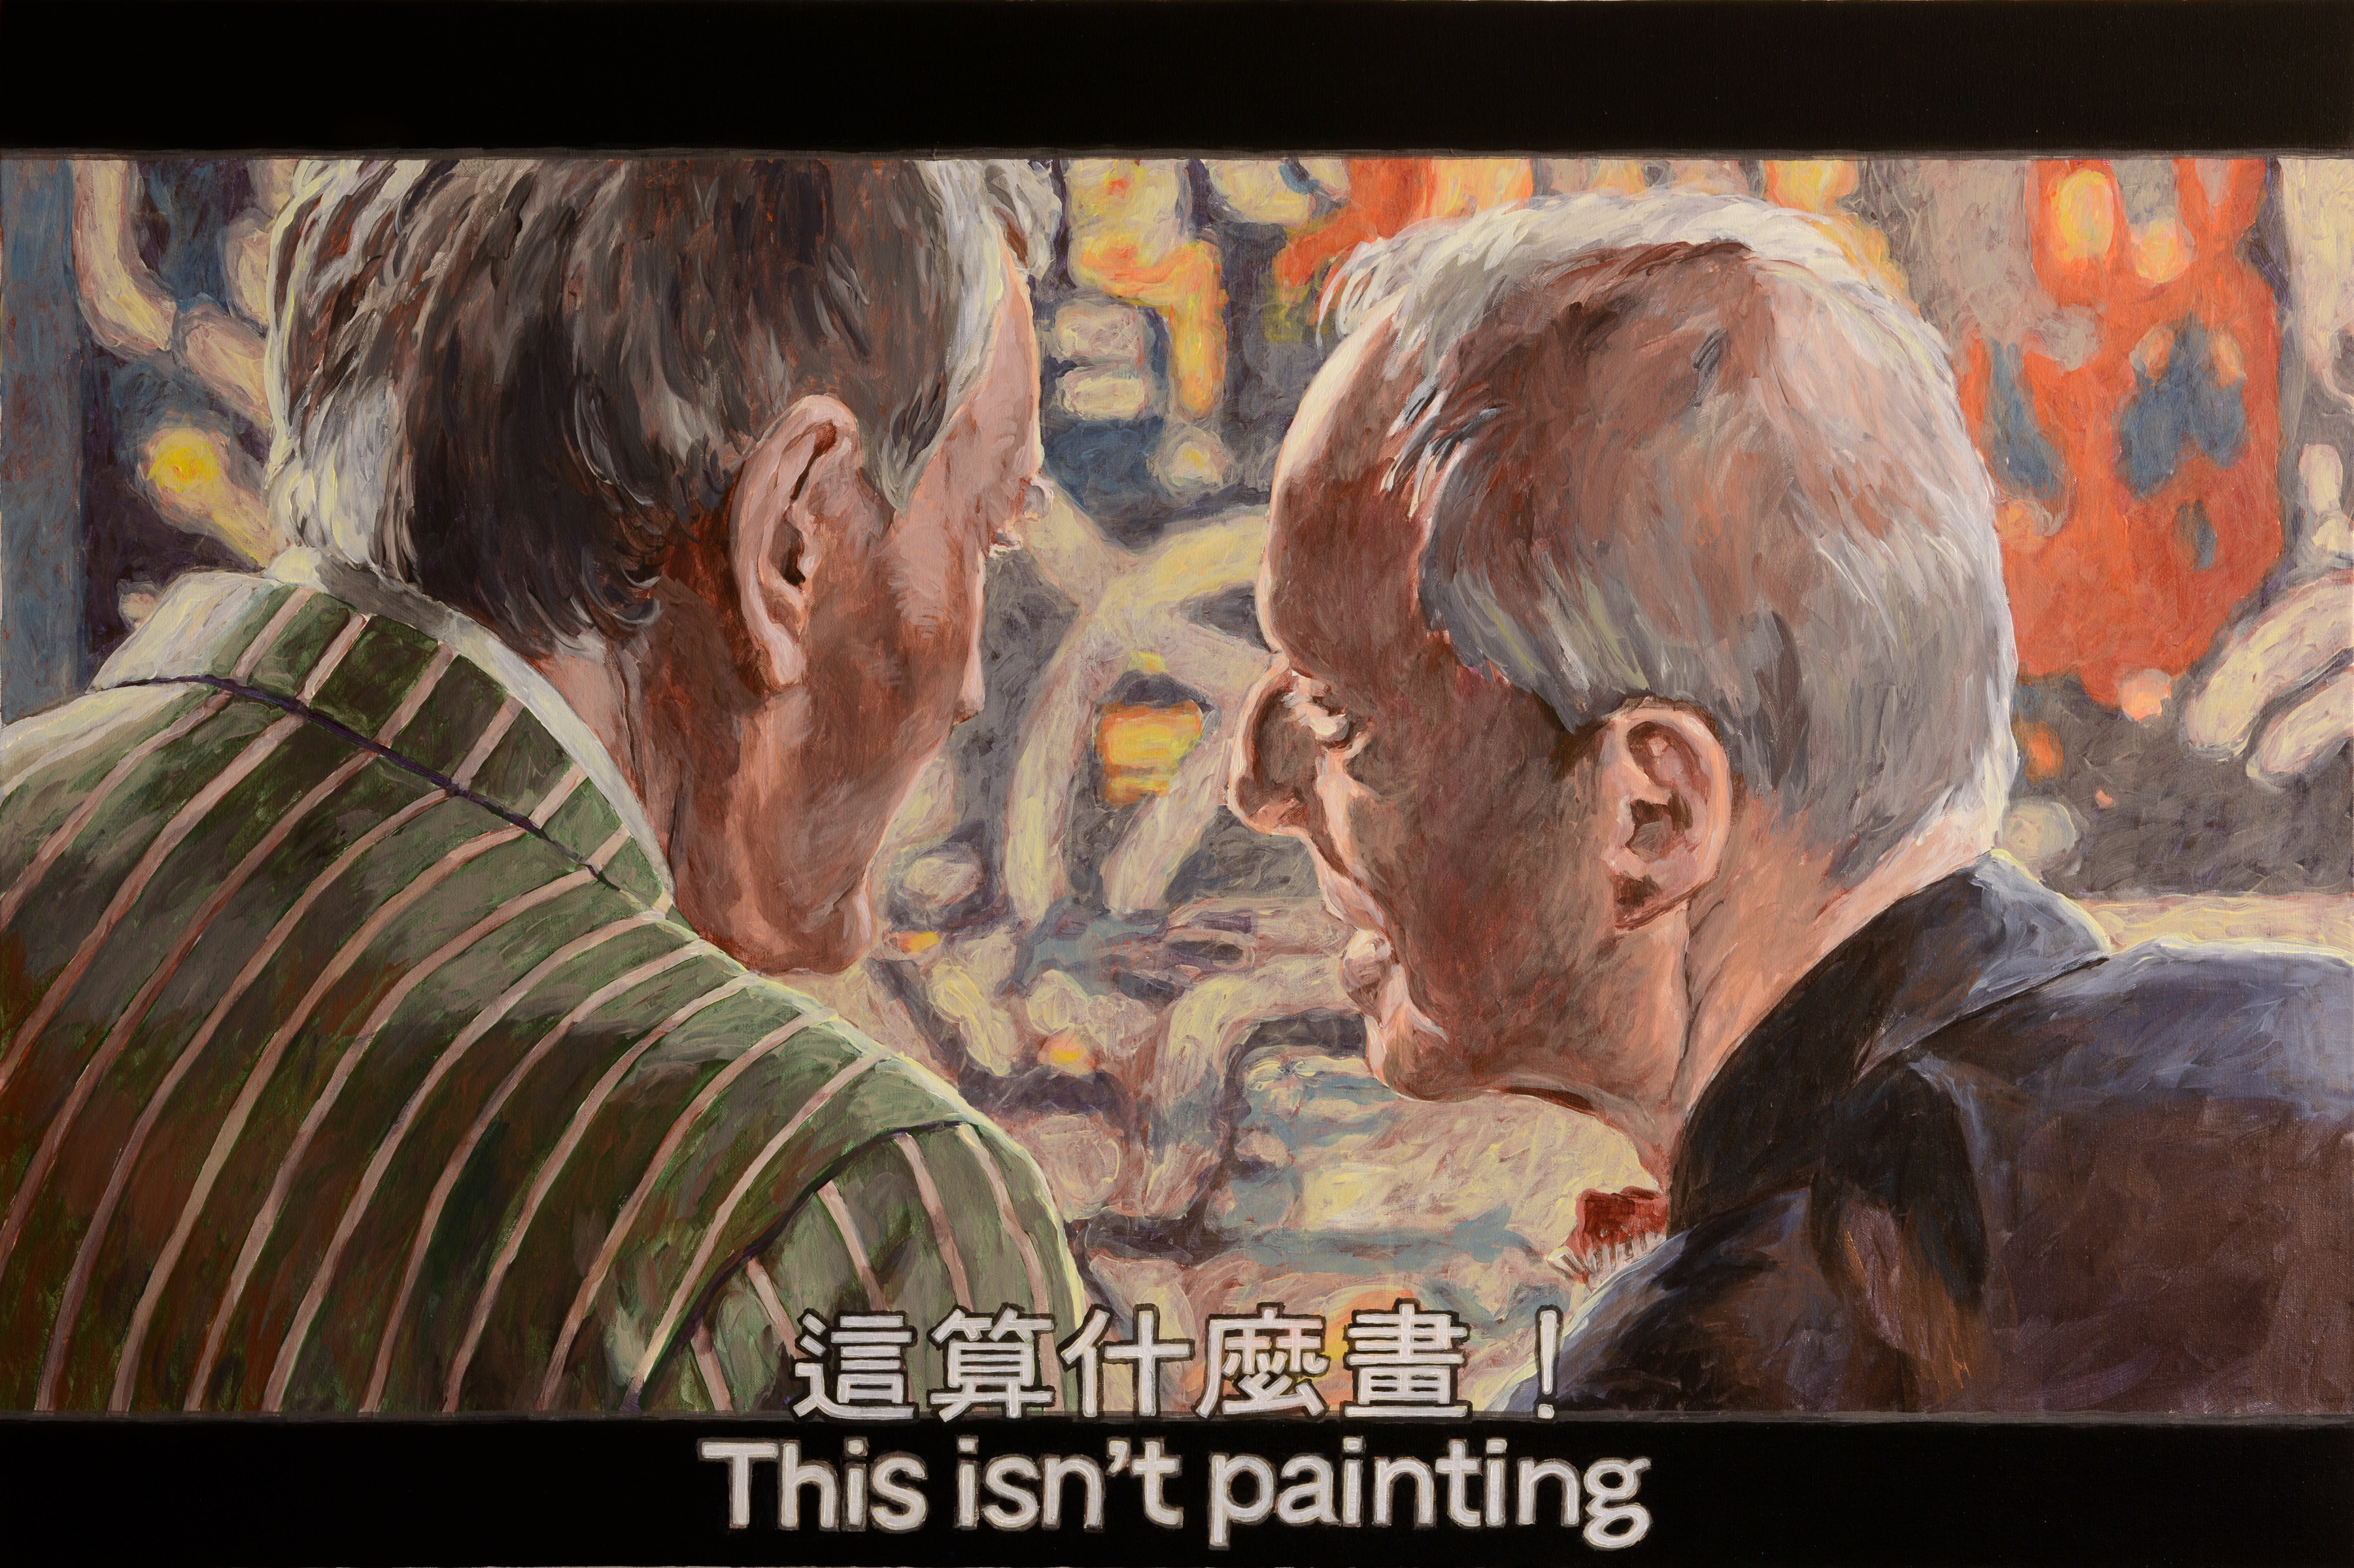 Pollock: This isn't painting